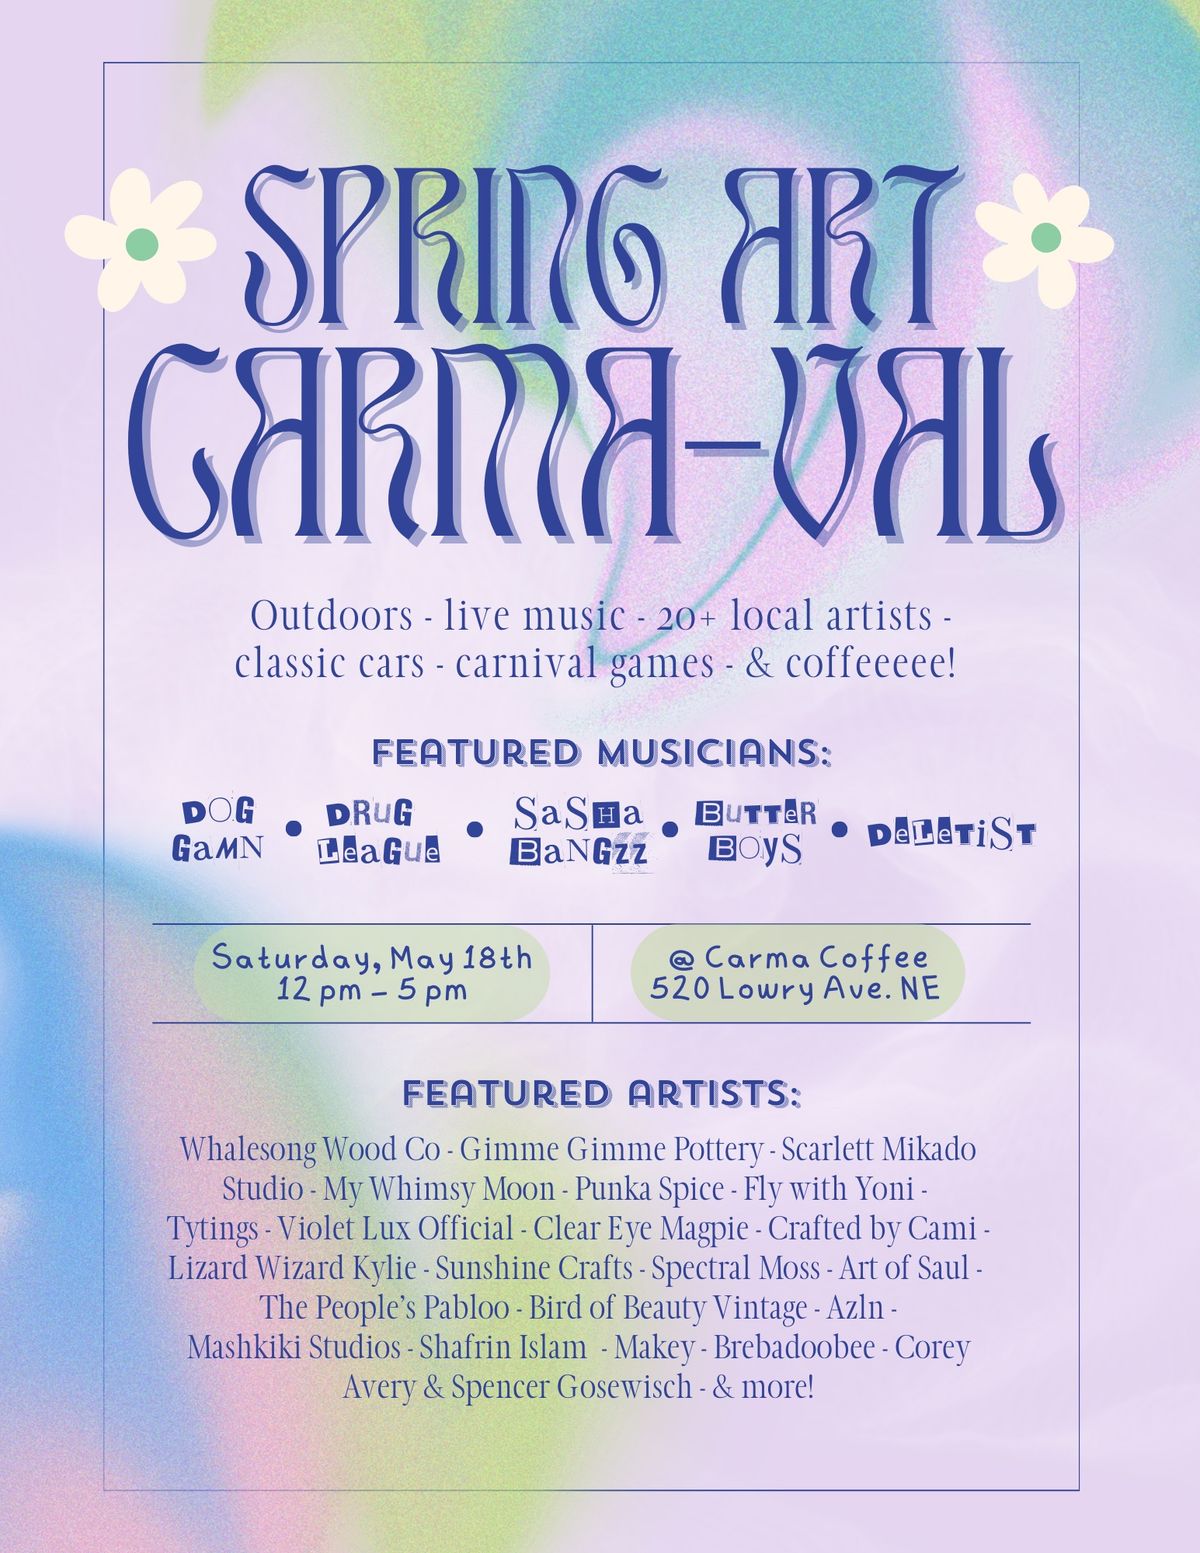 Spring Art Fair - An Art Carma-Val! 